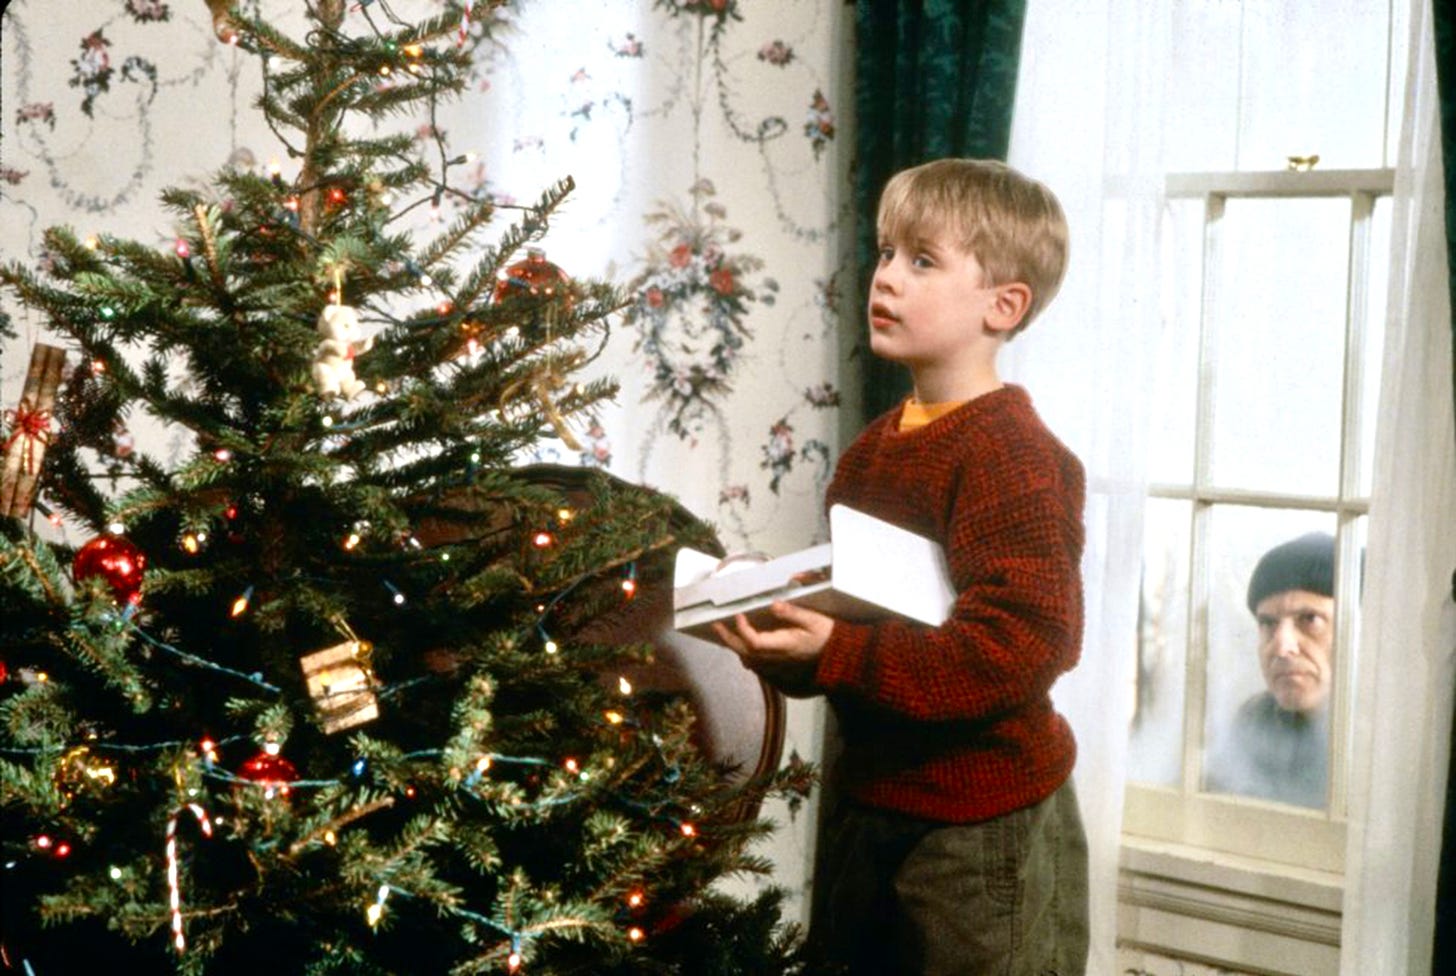 A burglar peeks through a window at a young boy decorating a Christmas tree.